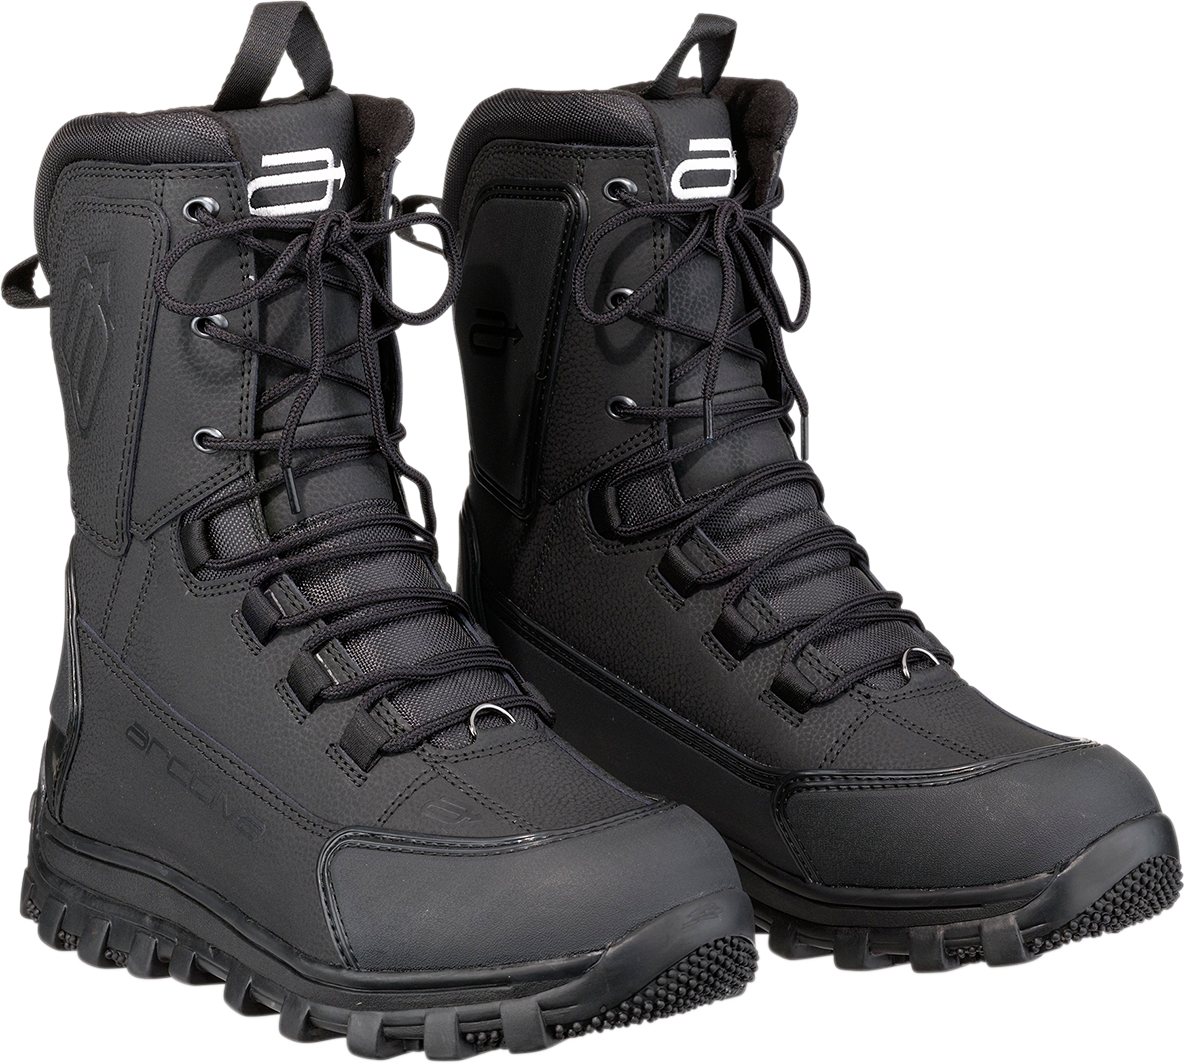 ARCTIVA Advance Boots - Black - Size 8 3420-0641